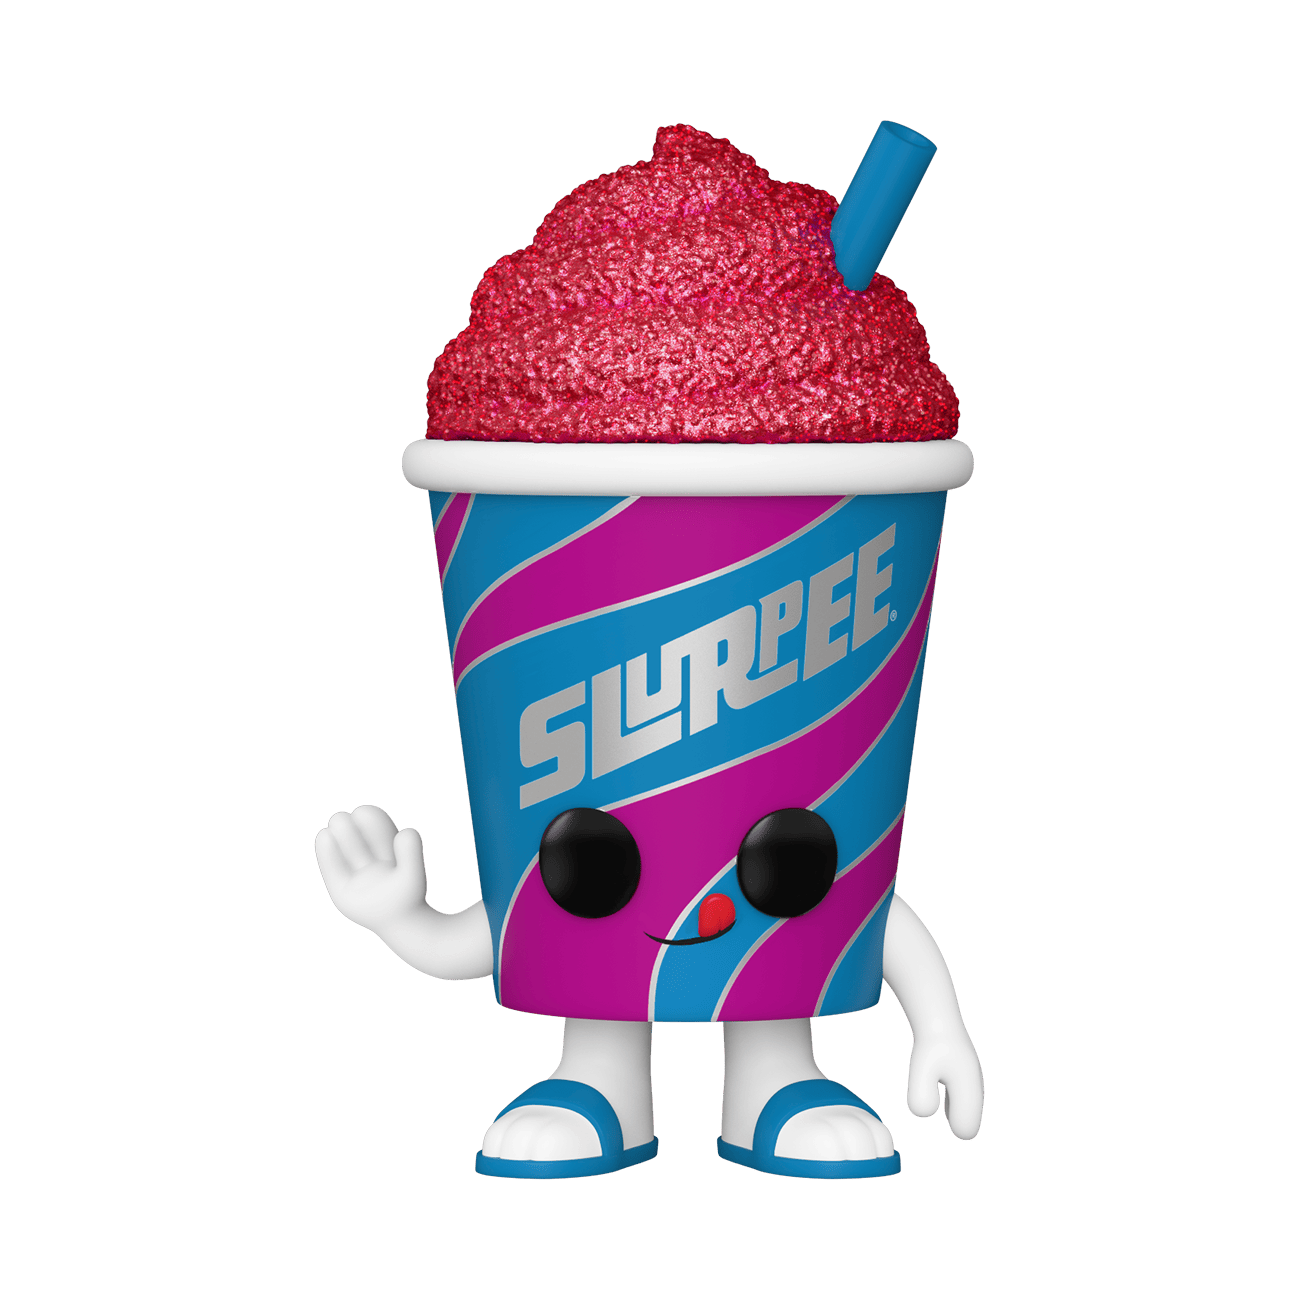 Pop! Funko: Slurpee® 194 – 7Collection™